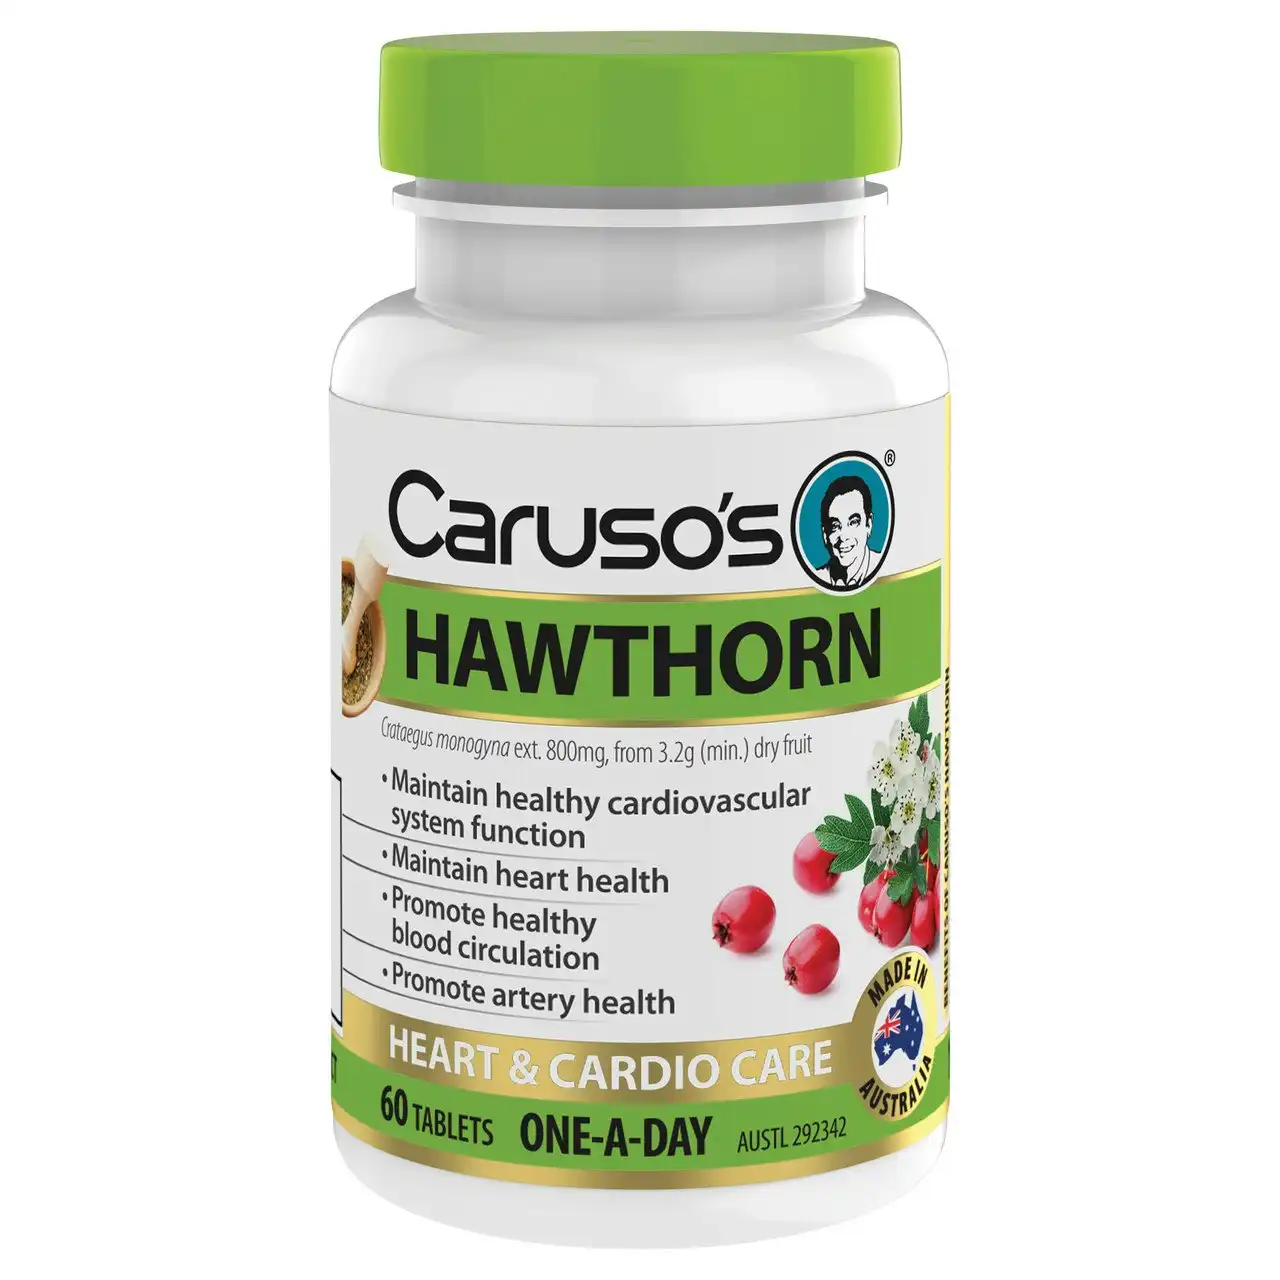 Caruso's Hawthorn